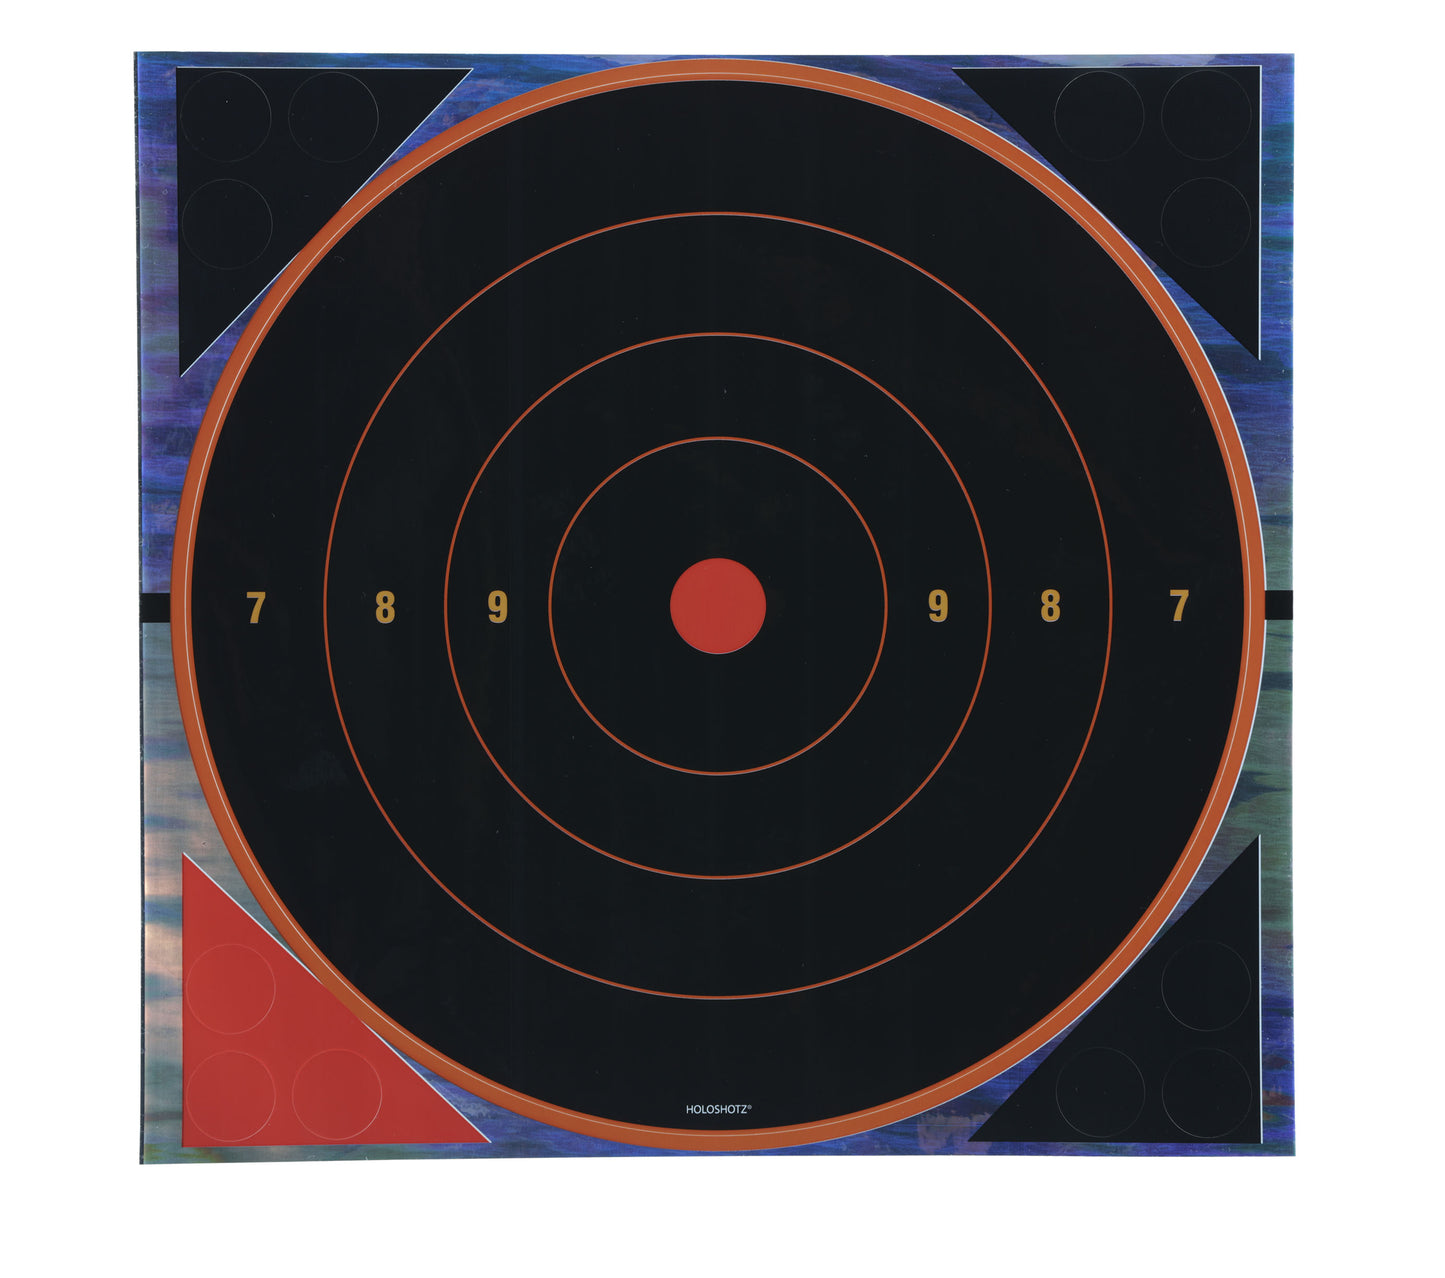 12" x 12" Bullseye Reflective Halo Target, 4 Sheets Per Pack